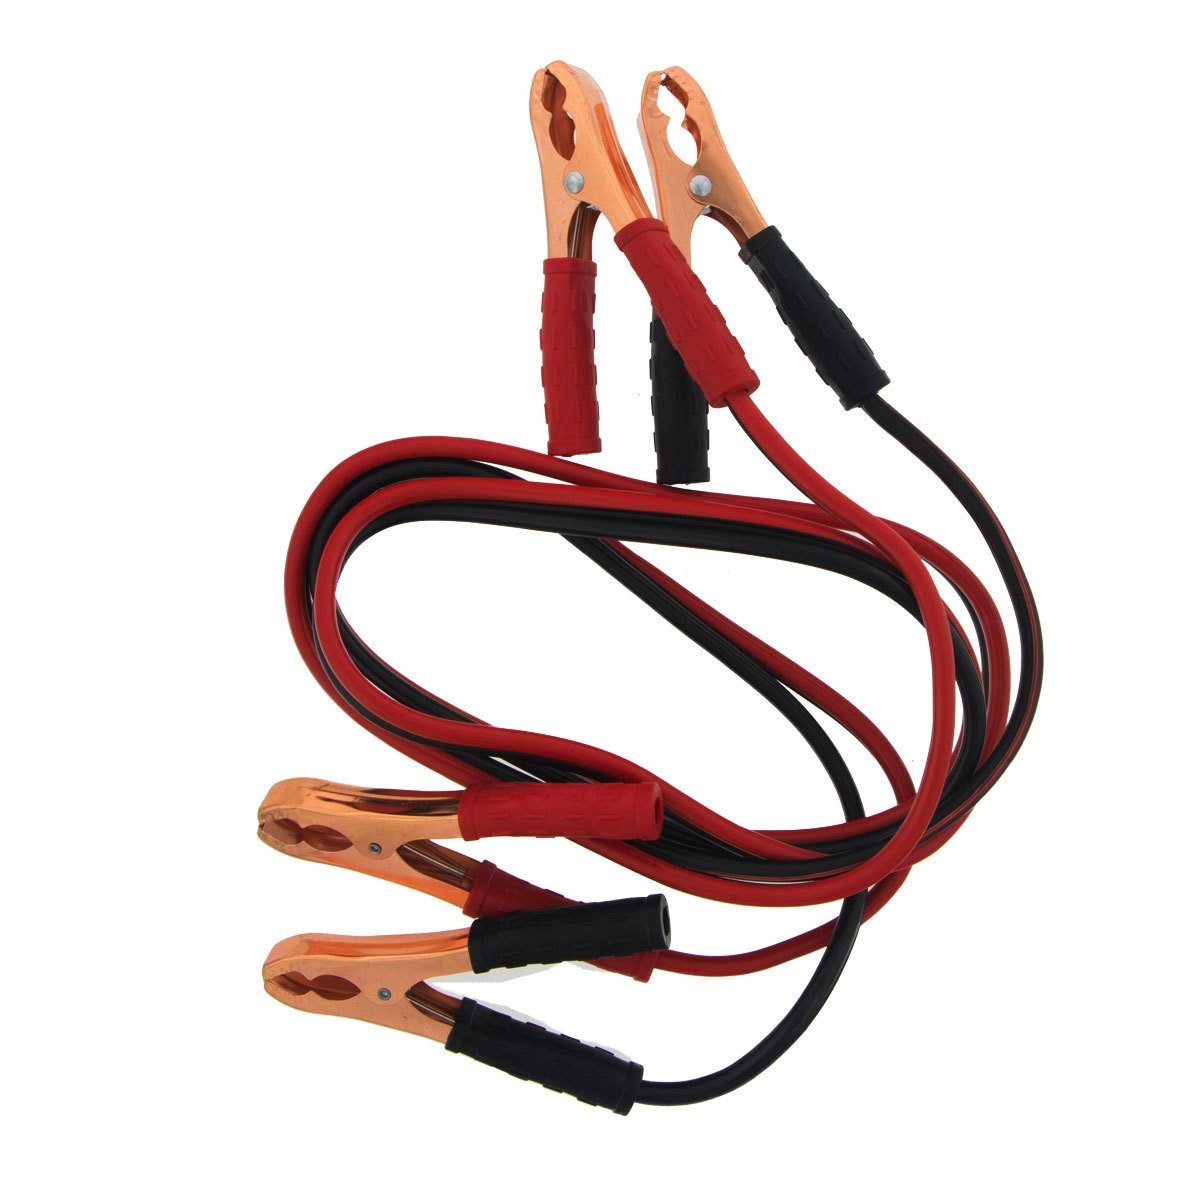 Auto wire Cable Lagarto para transferencia de carga entre baterias